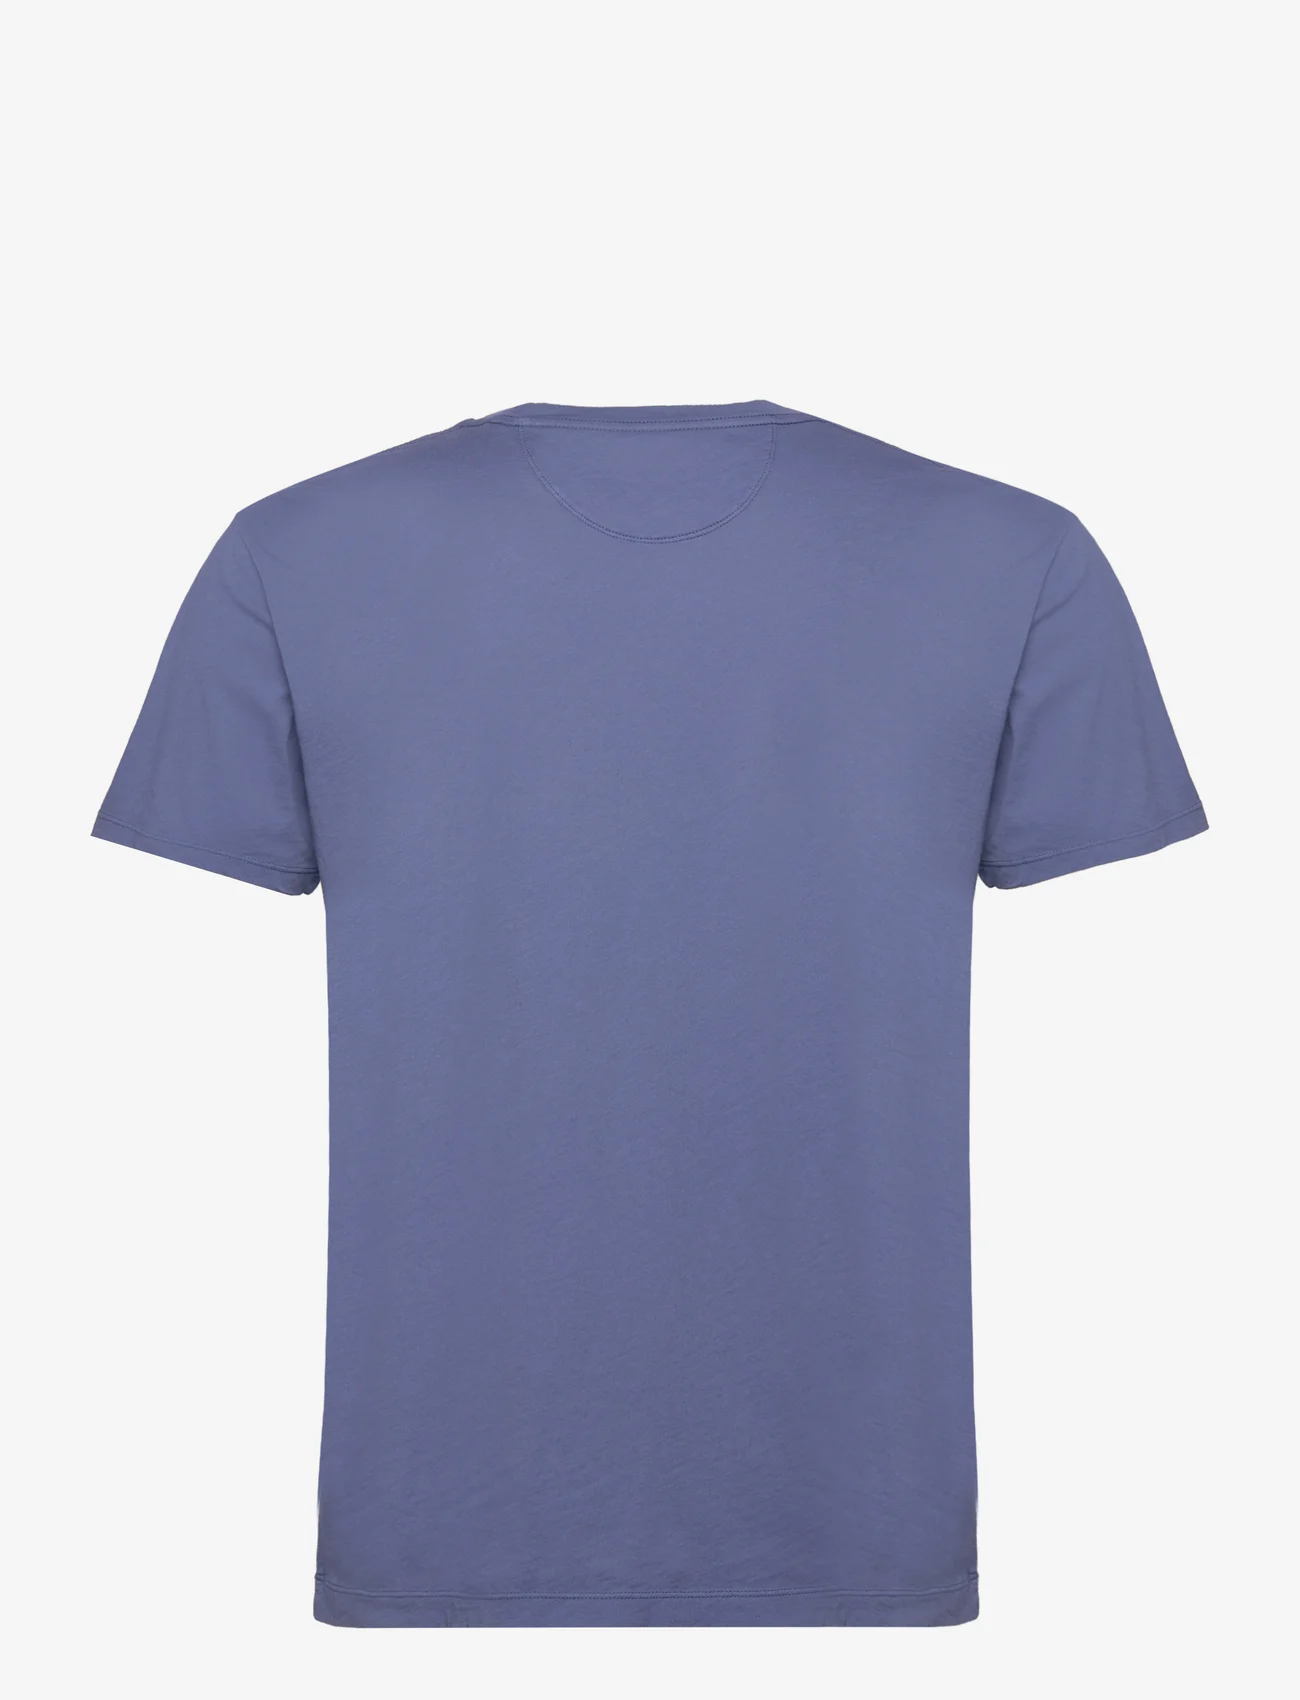 Hackett London - GMT DYE TEE - short-sleeved t-shirts - avio - 1